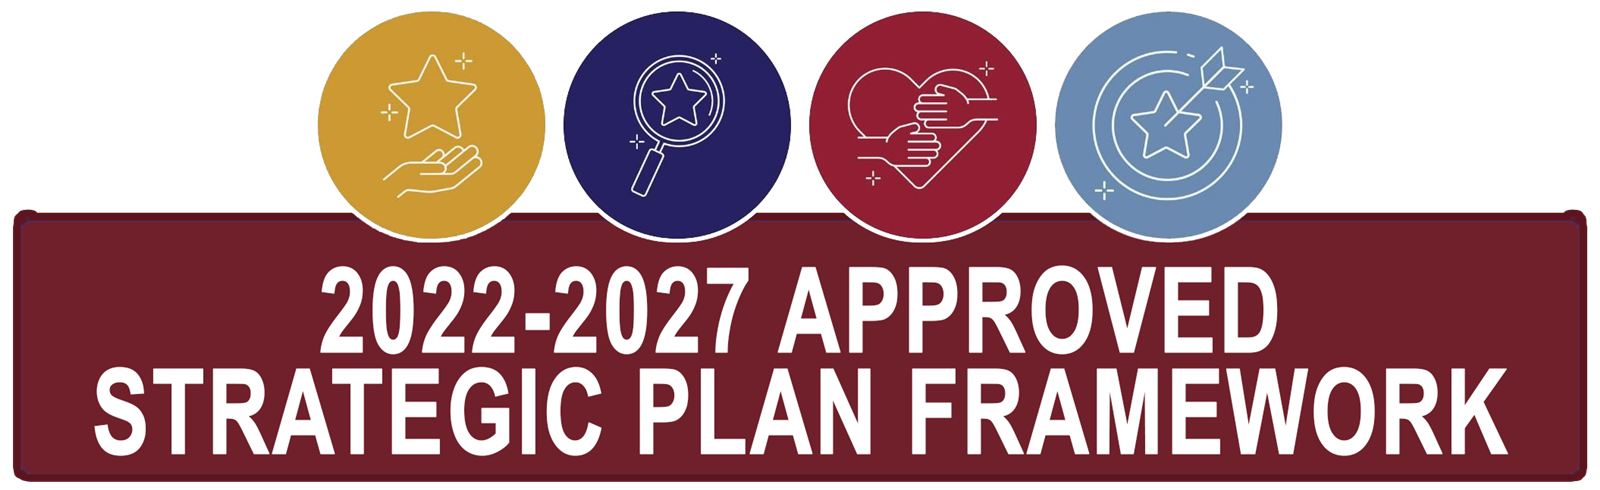 2022-2027 Approved Strategic Plan Framework